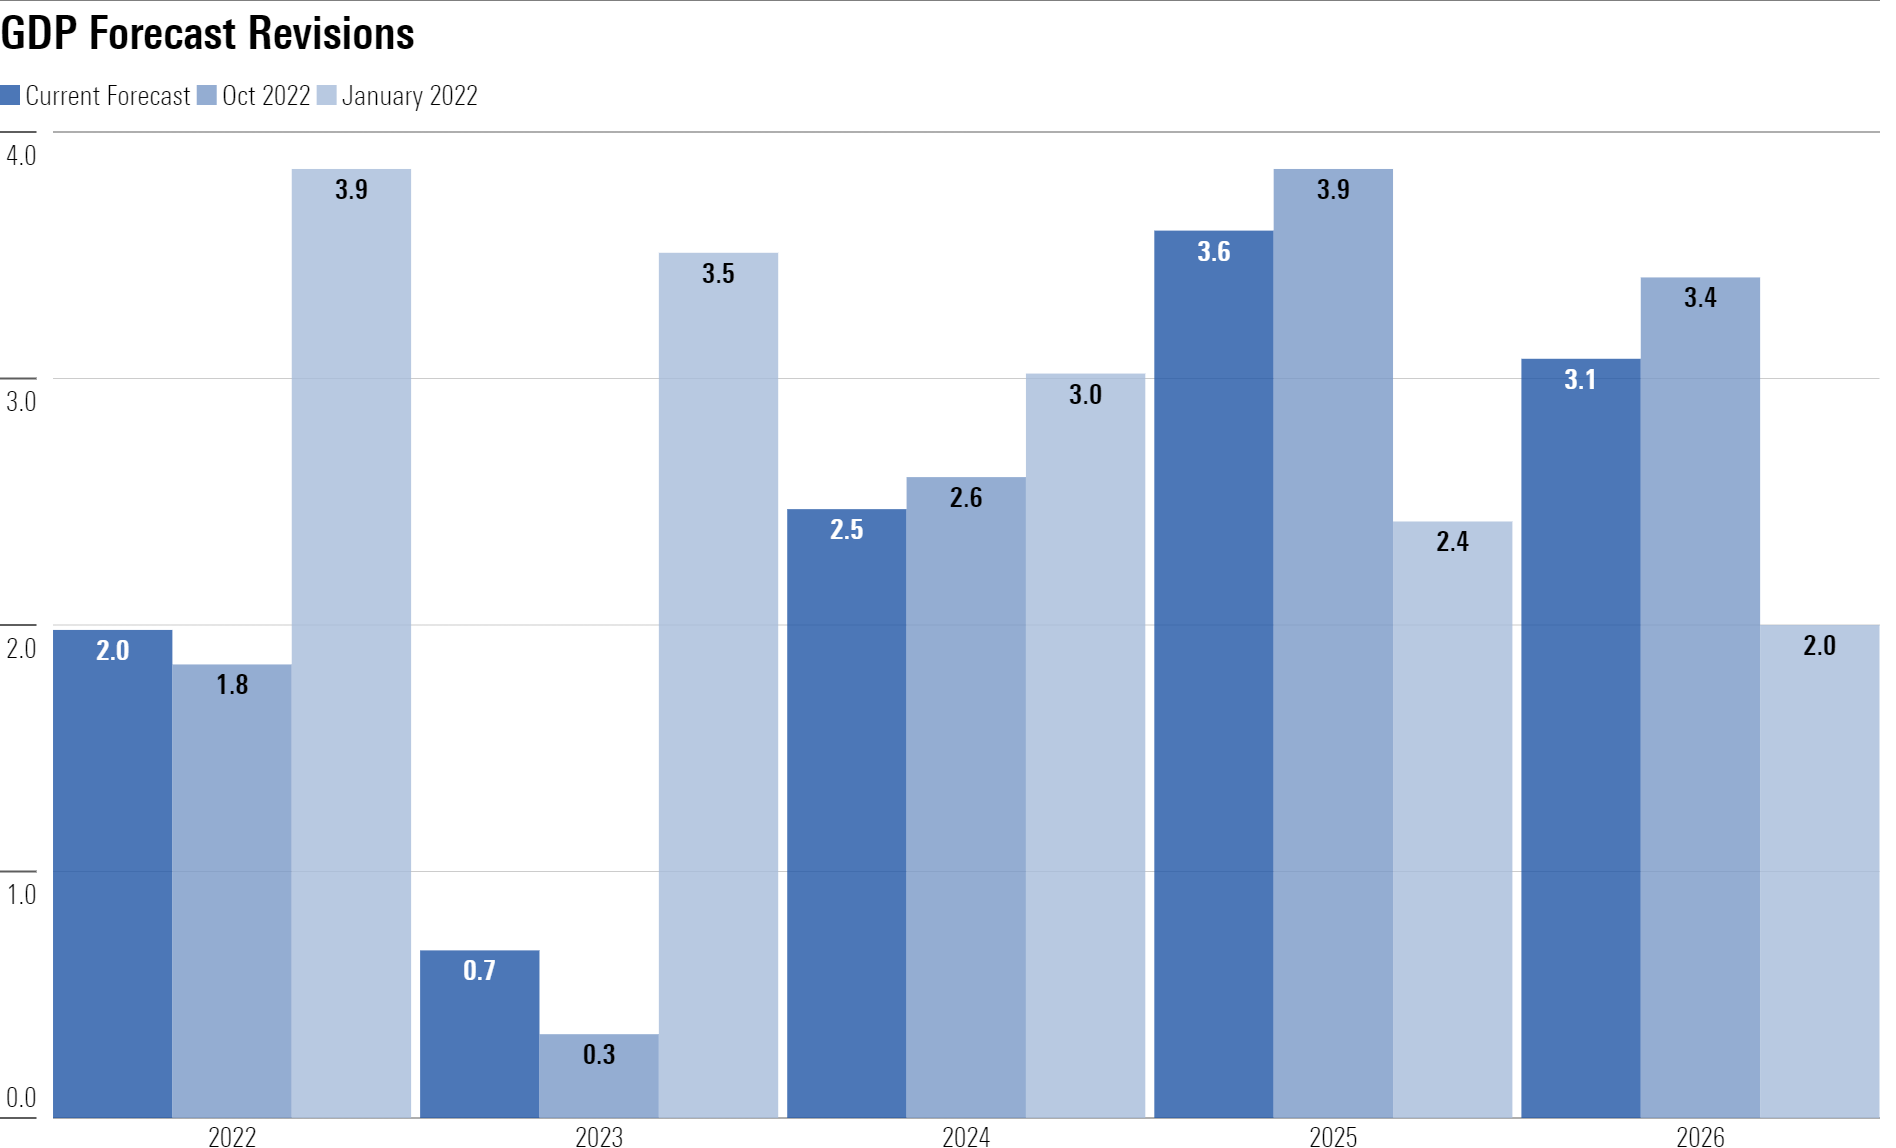 Bar chart of Morningstar's GDP forecast